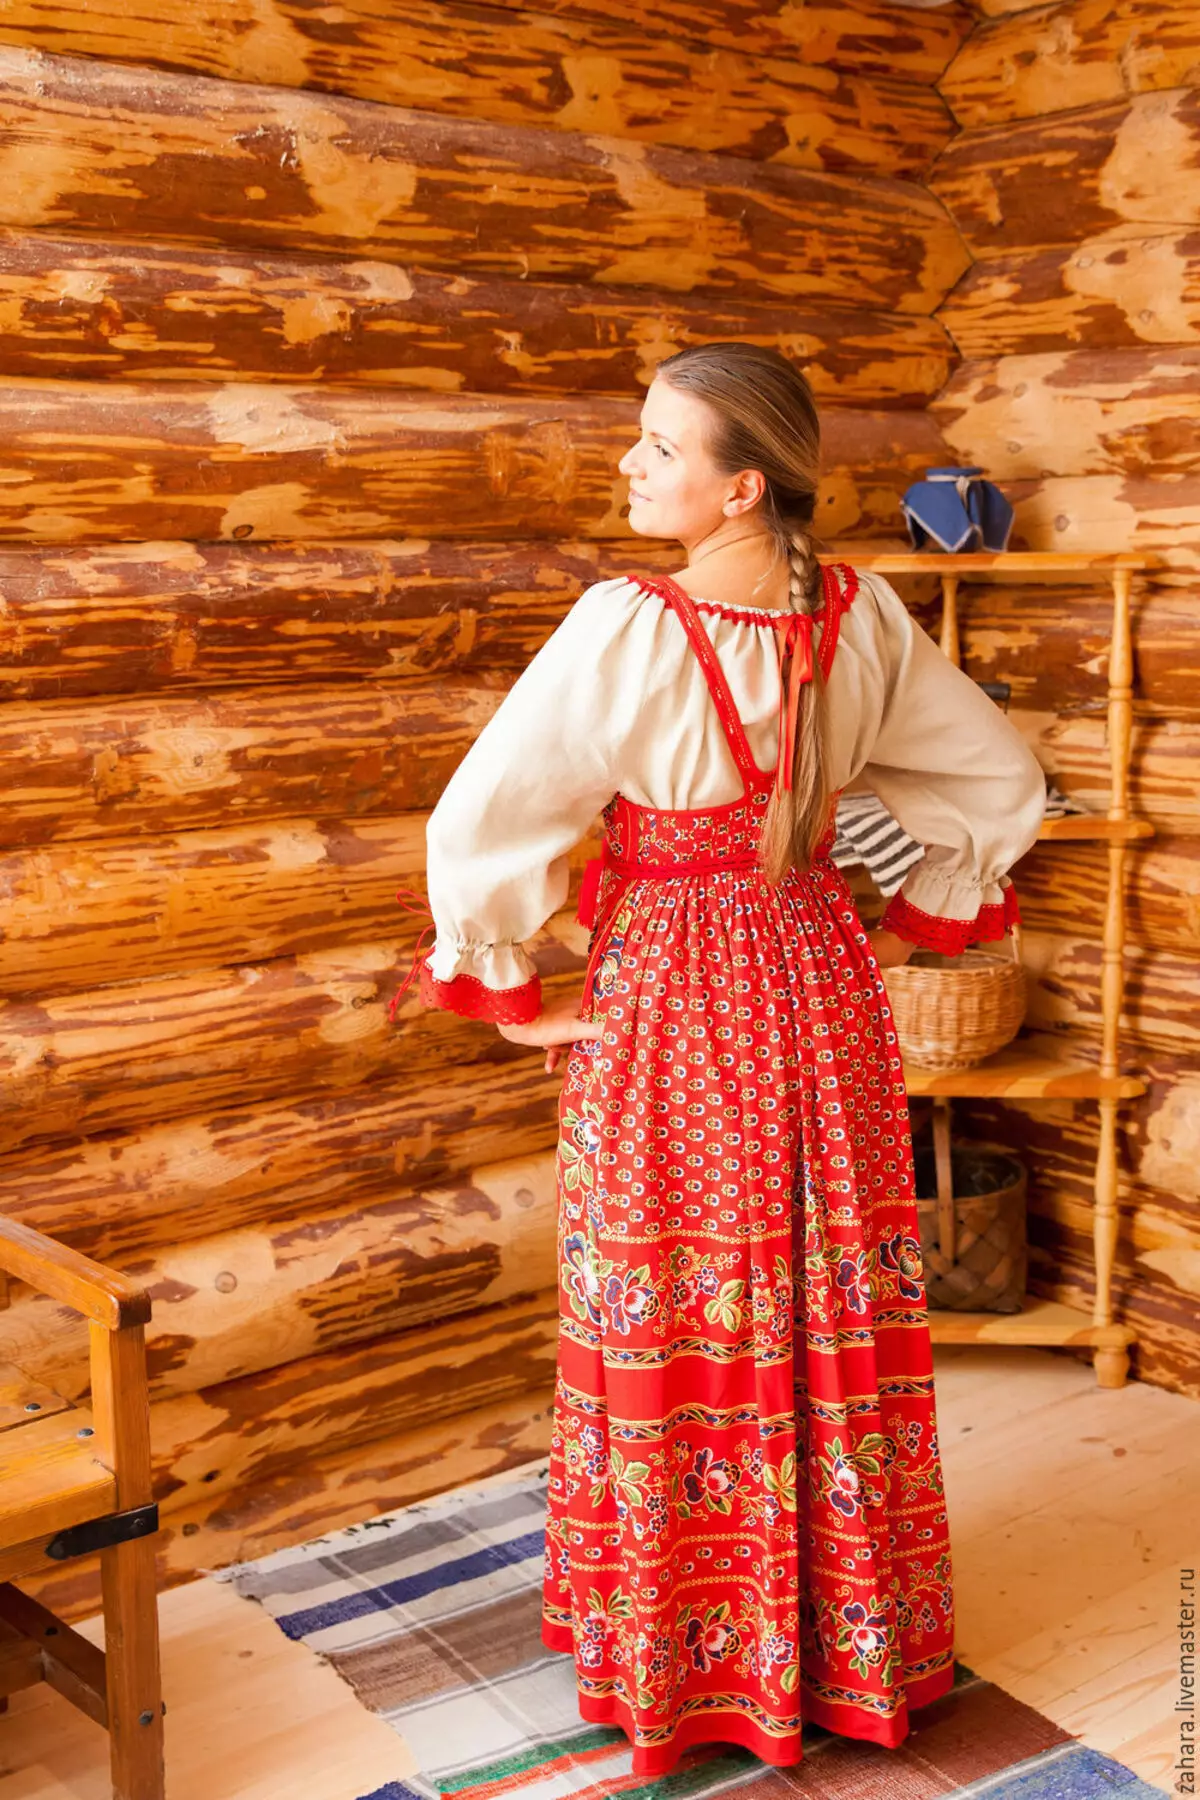 Russische kleding (99 foto's): Slavische en Russische folk-stijl, Ivanka, bovenkleding 3714_24